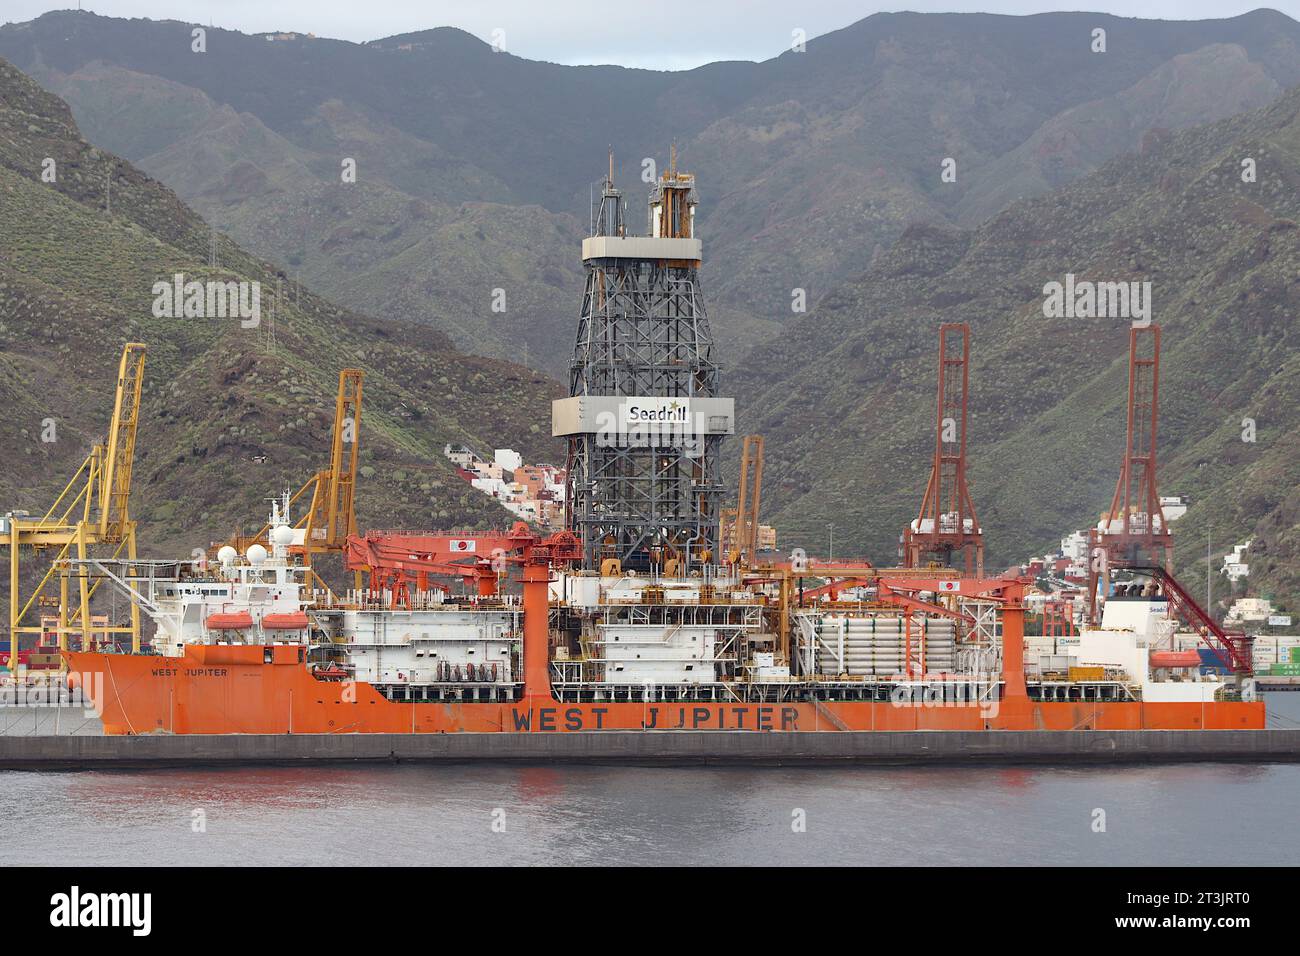 West Jupiter, a 60,000 ton Panama flagged drilling ship owned by Seadrill Carina Ltd, berthed at Santa Cruz, Tenerife, Canary Islands, April 2022. Stock Photo